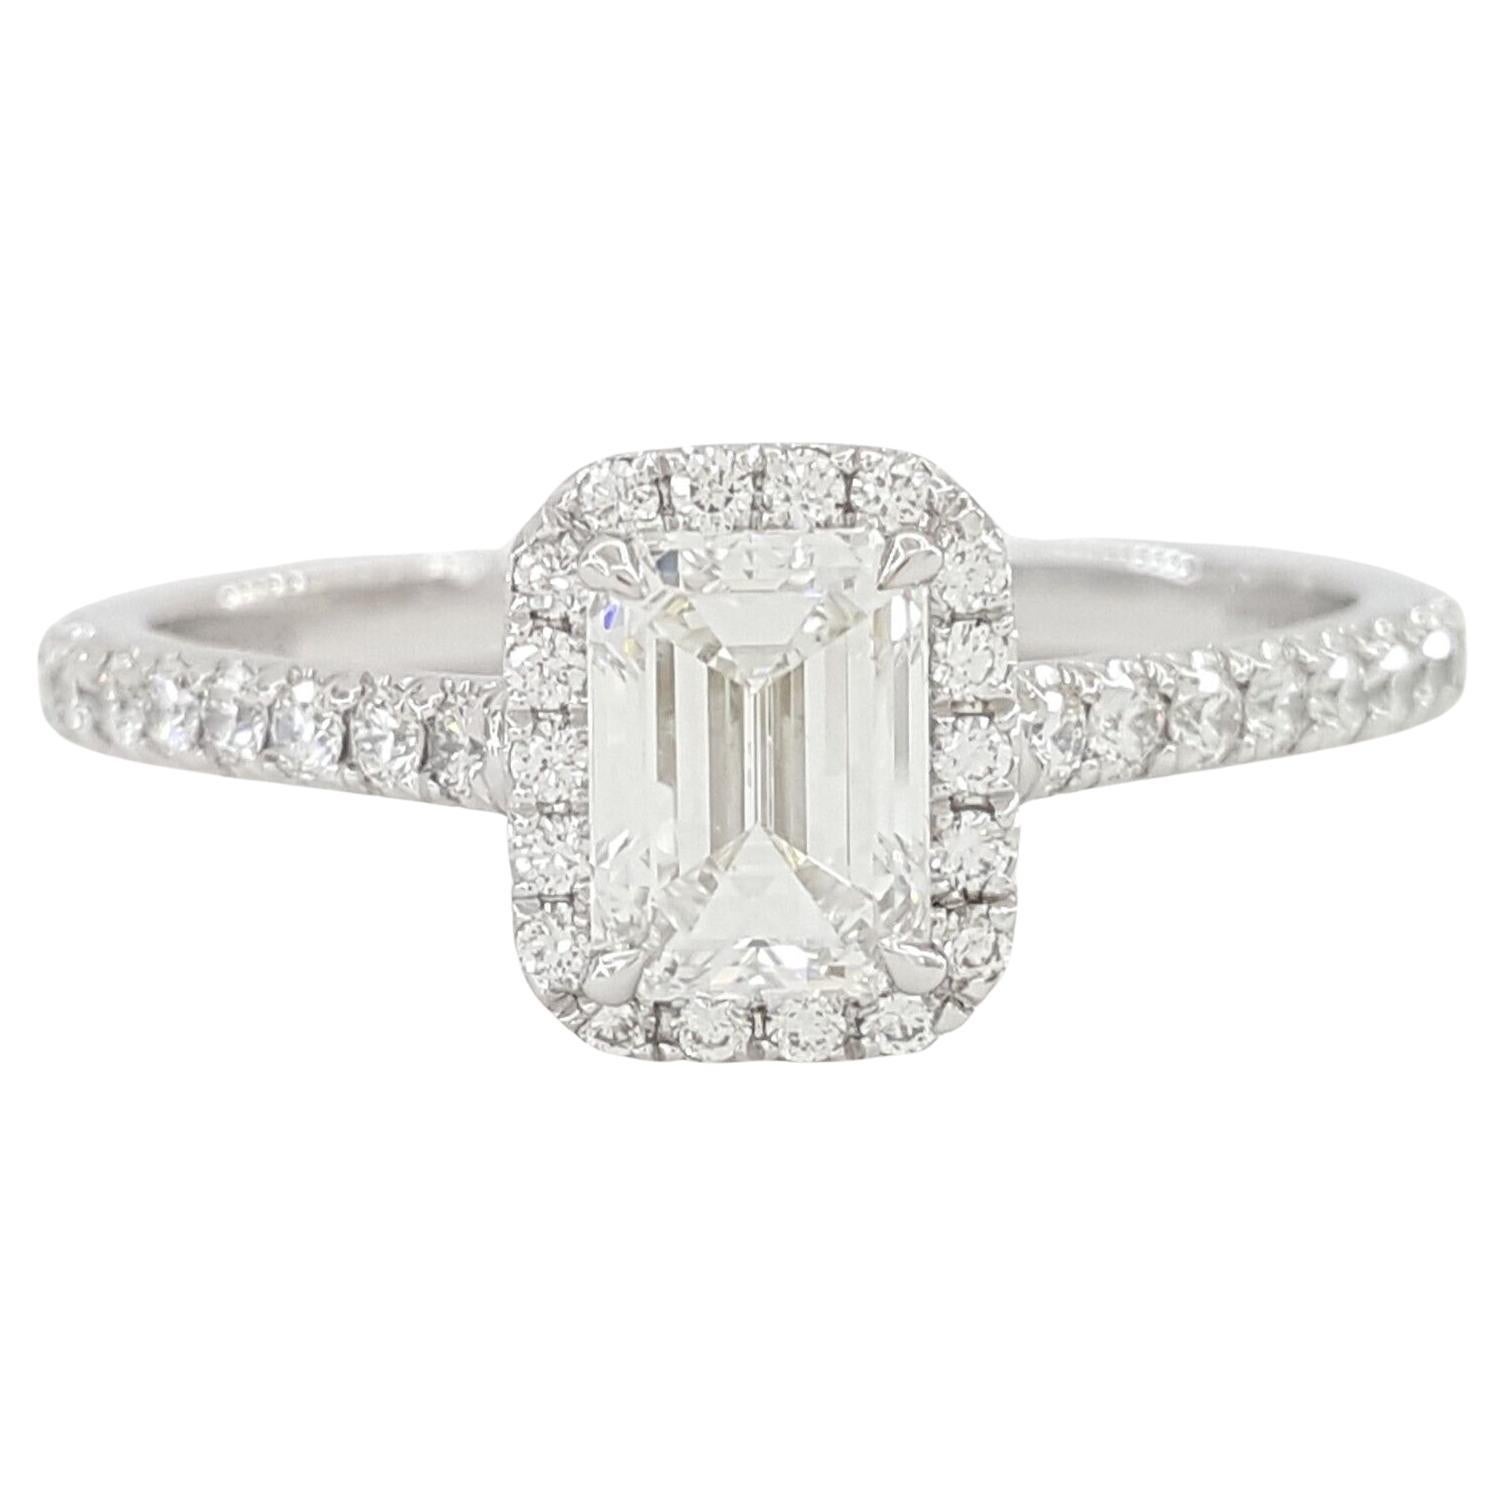 Tiffany & Co. Platinum Soleste Emerald Cut Excellent Ideal Cut Diamond Ring